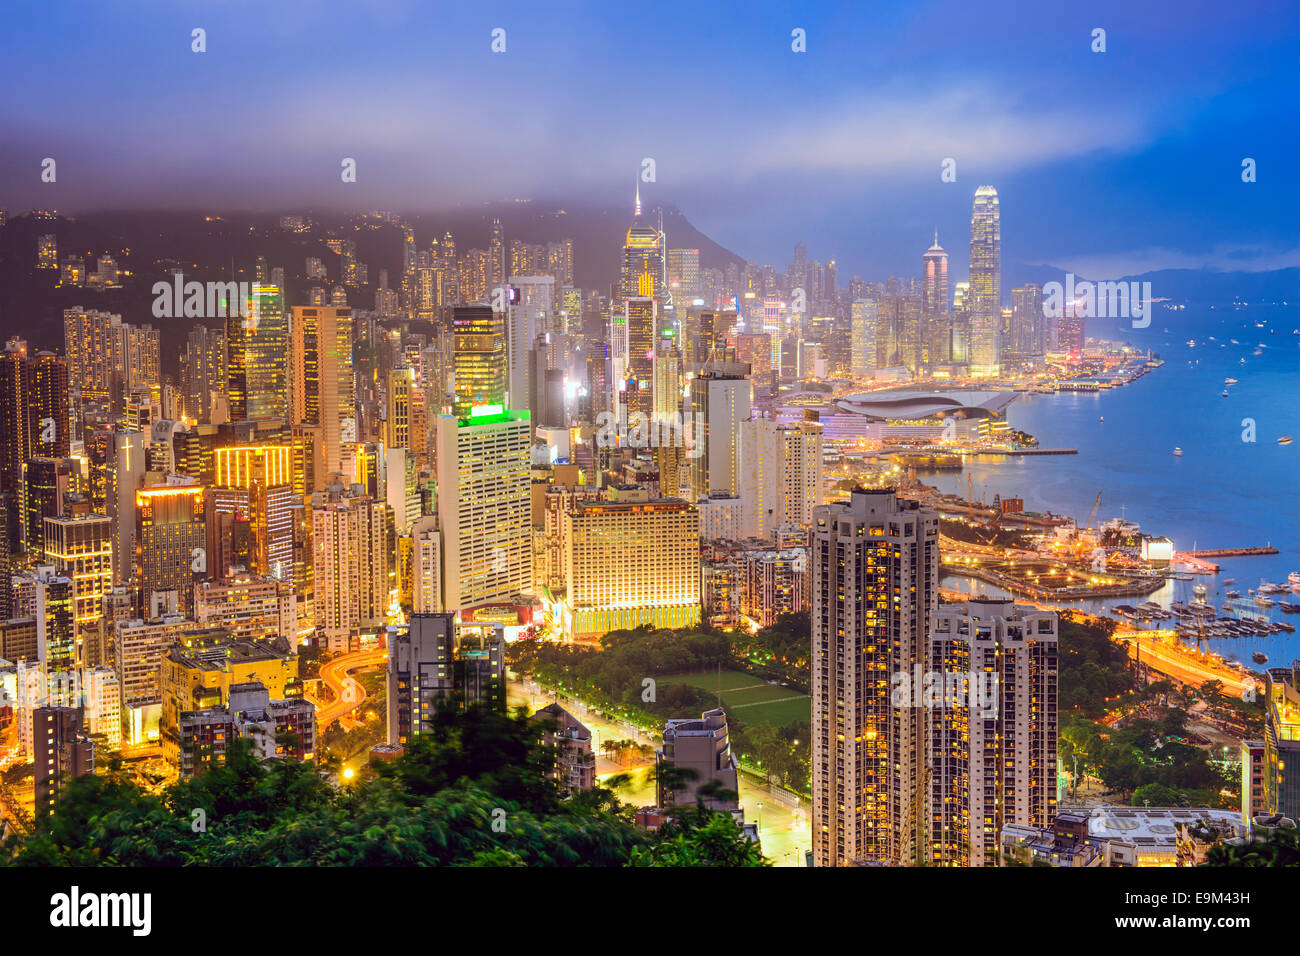 Hong Kong, China city skyline from Braemer Hill. Stock Photo